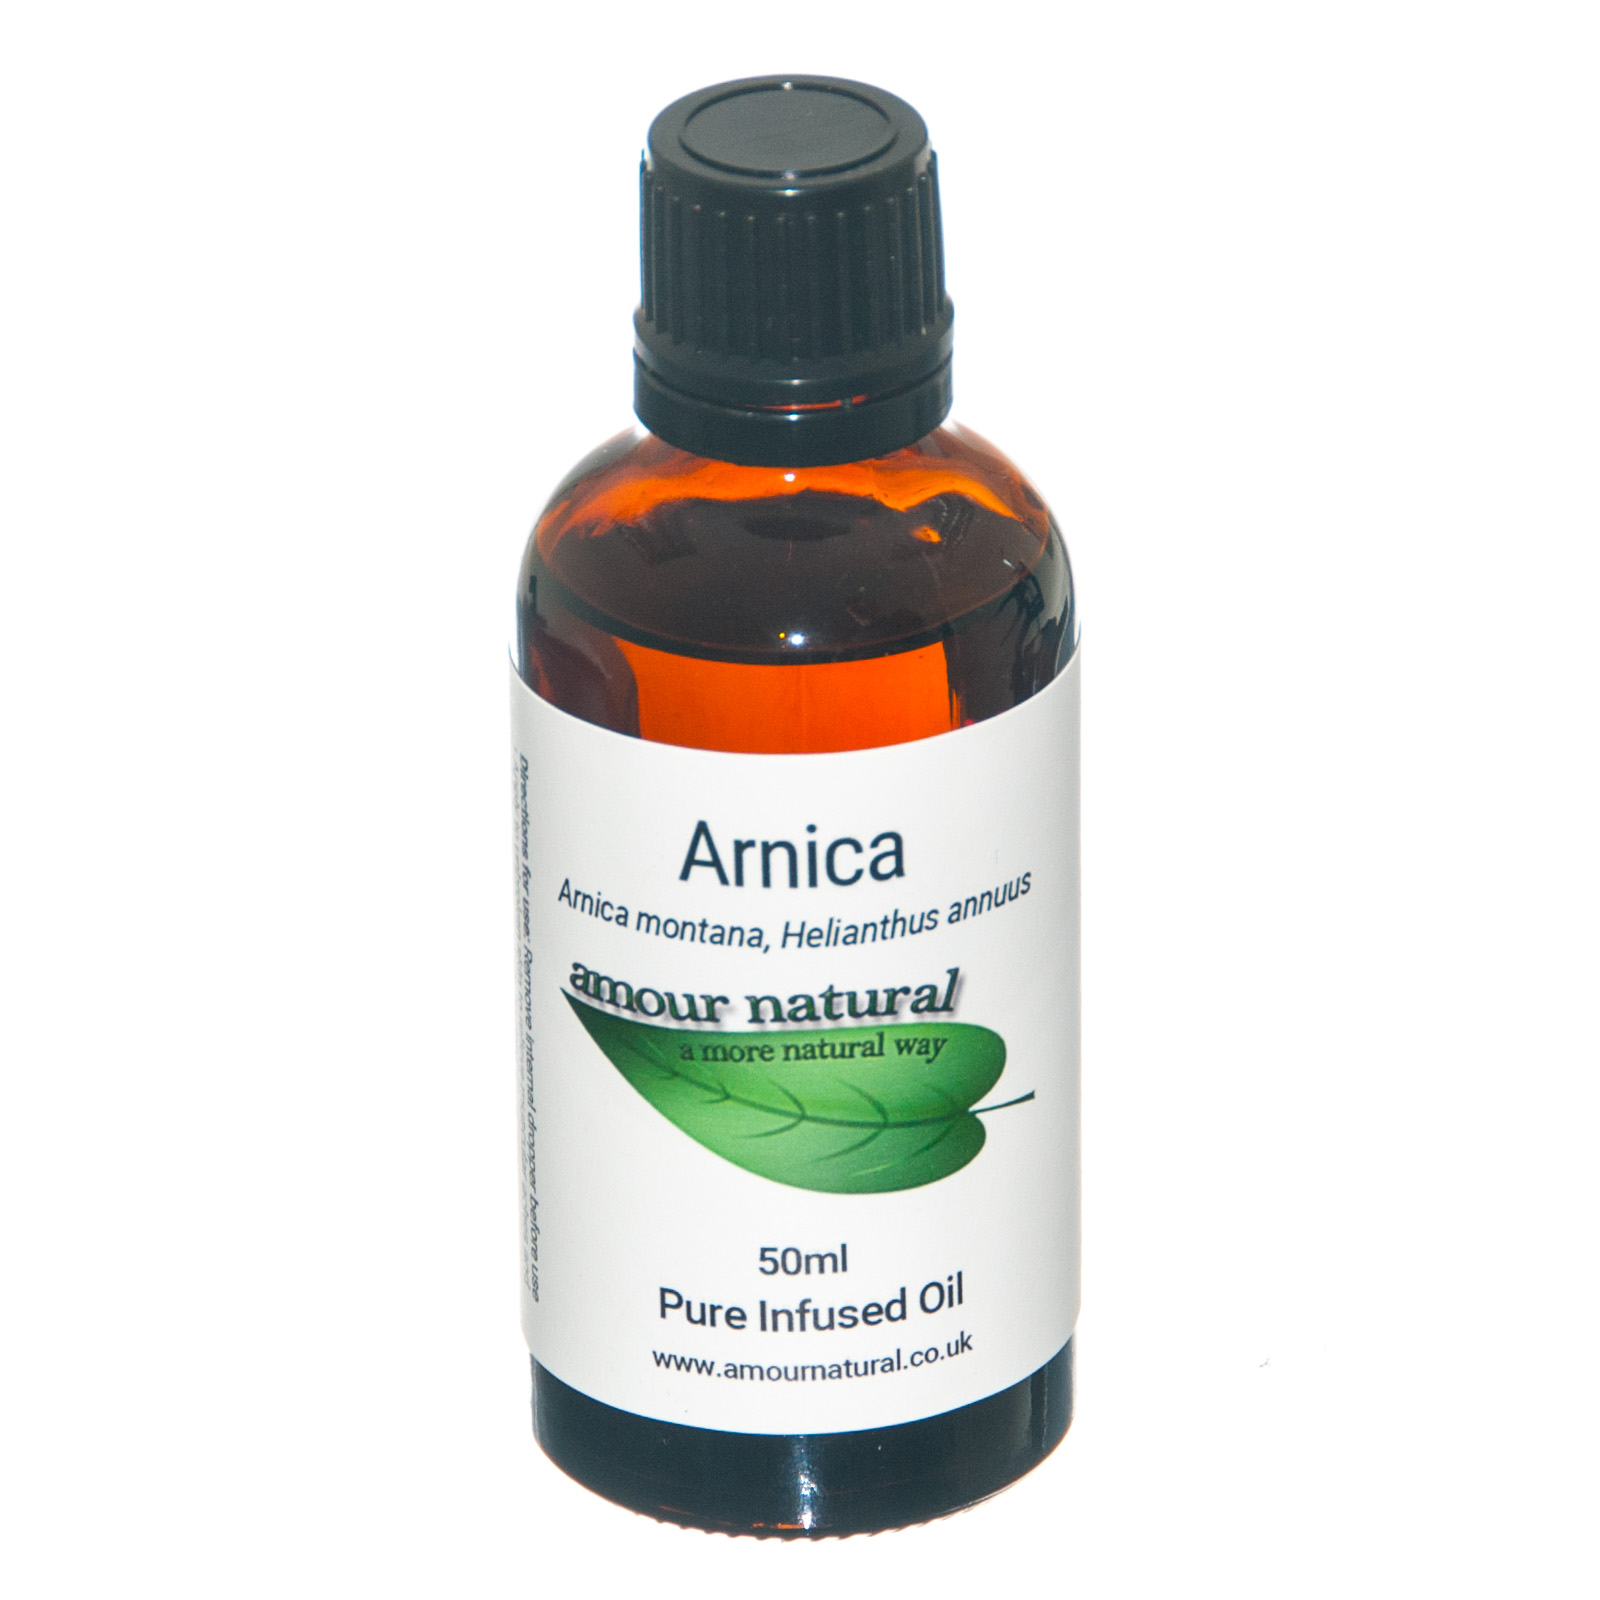 Arnica oil, infused